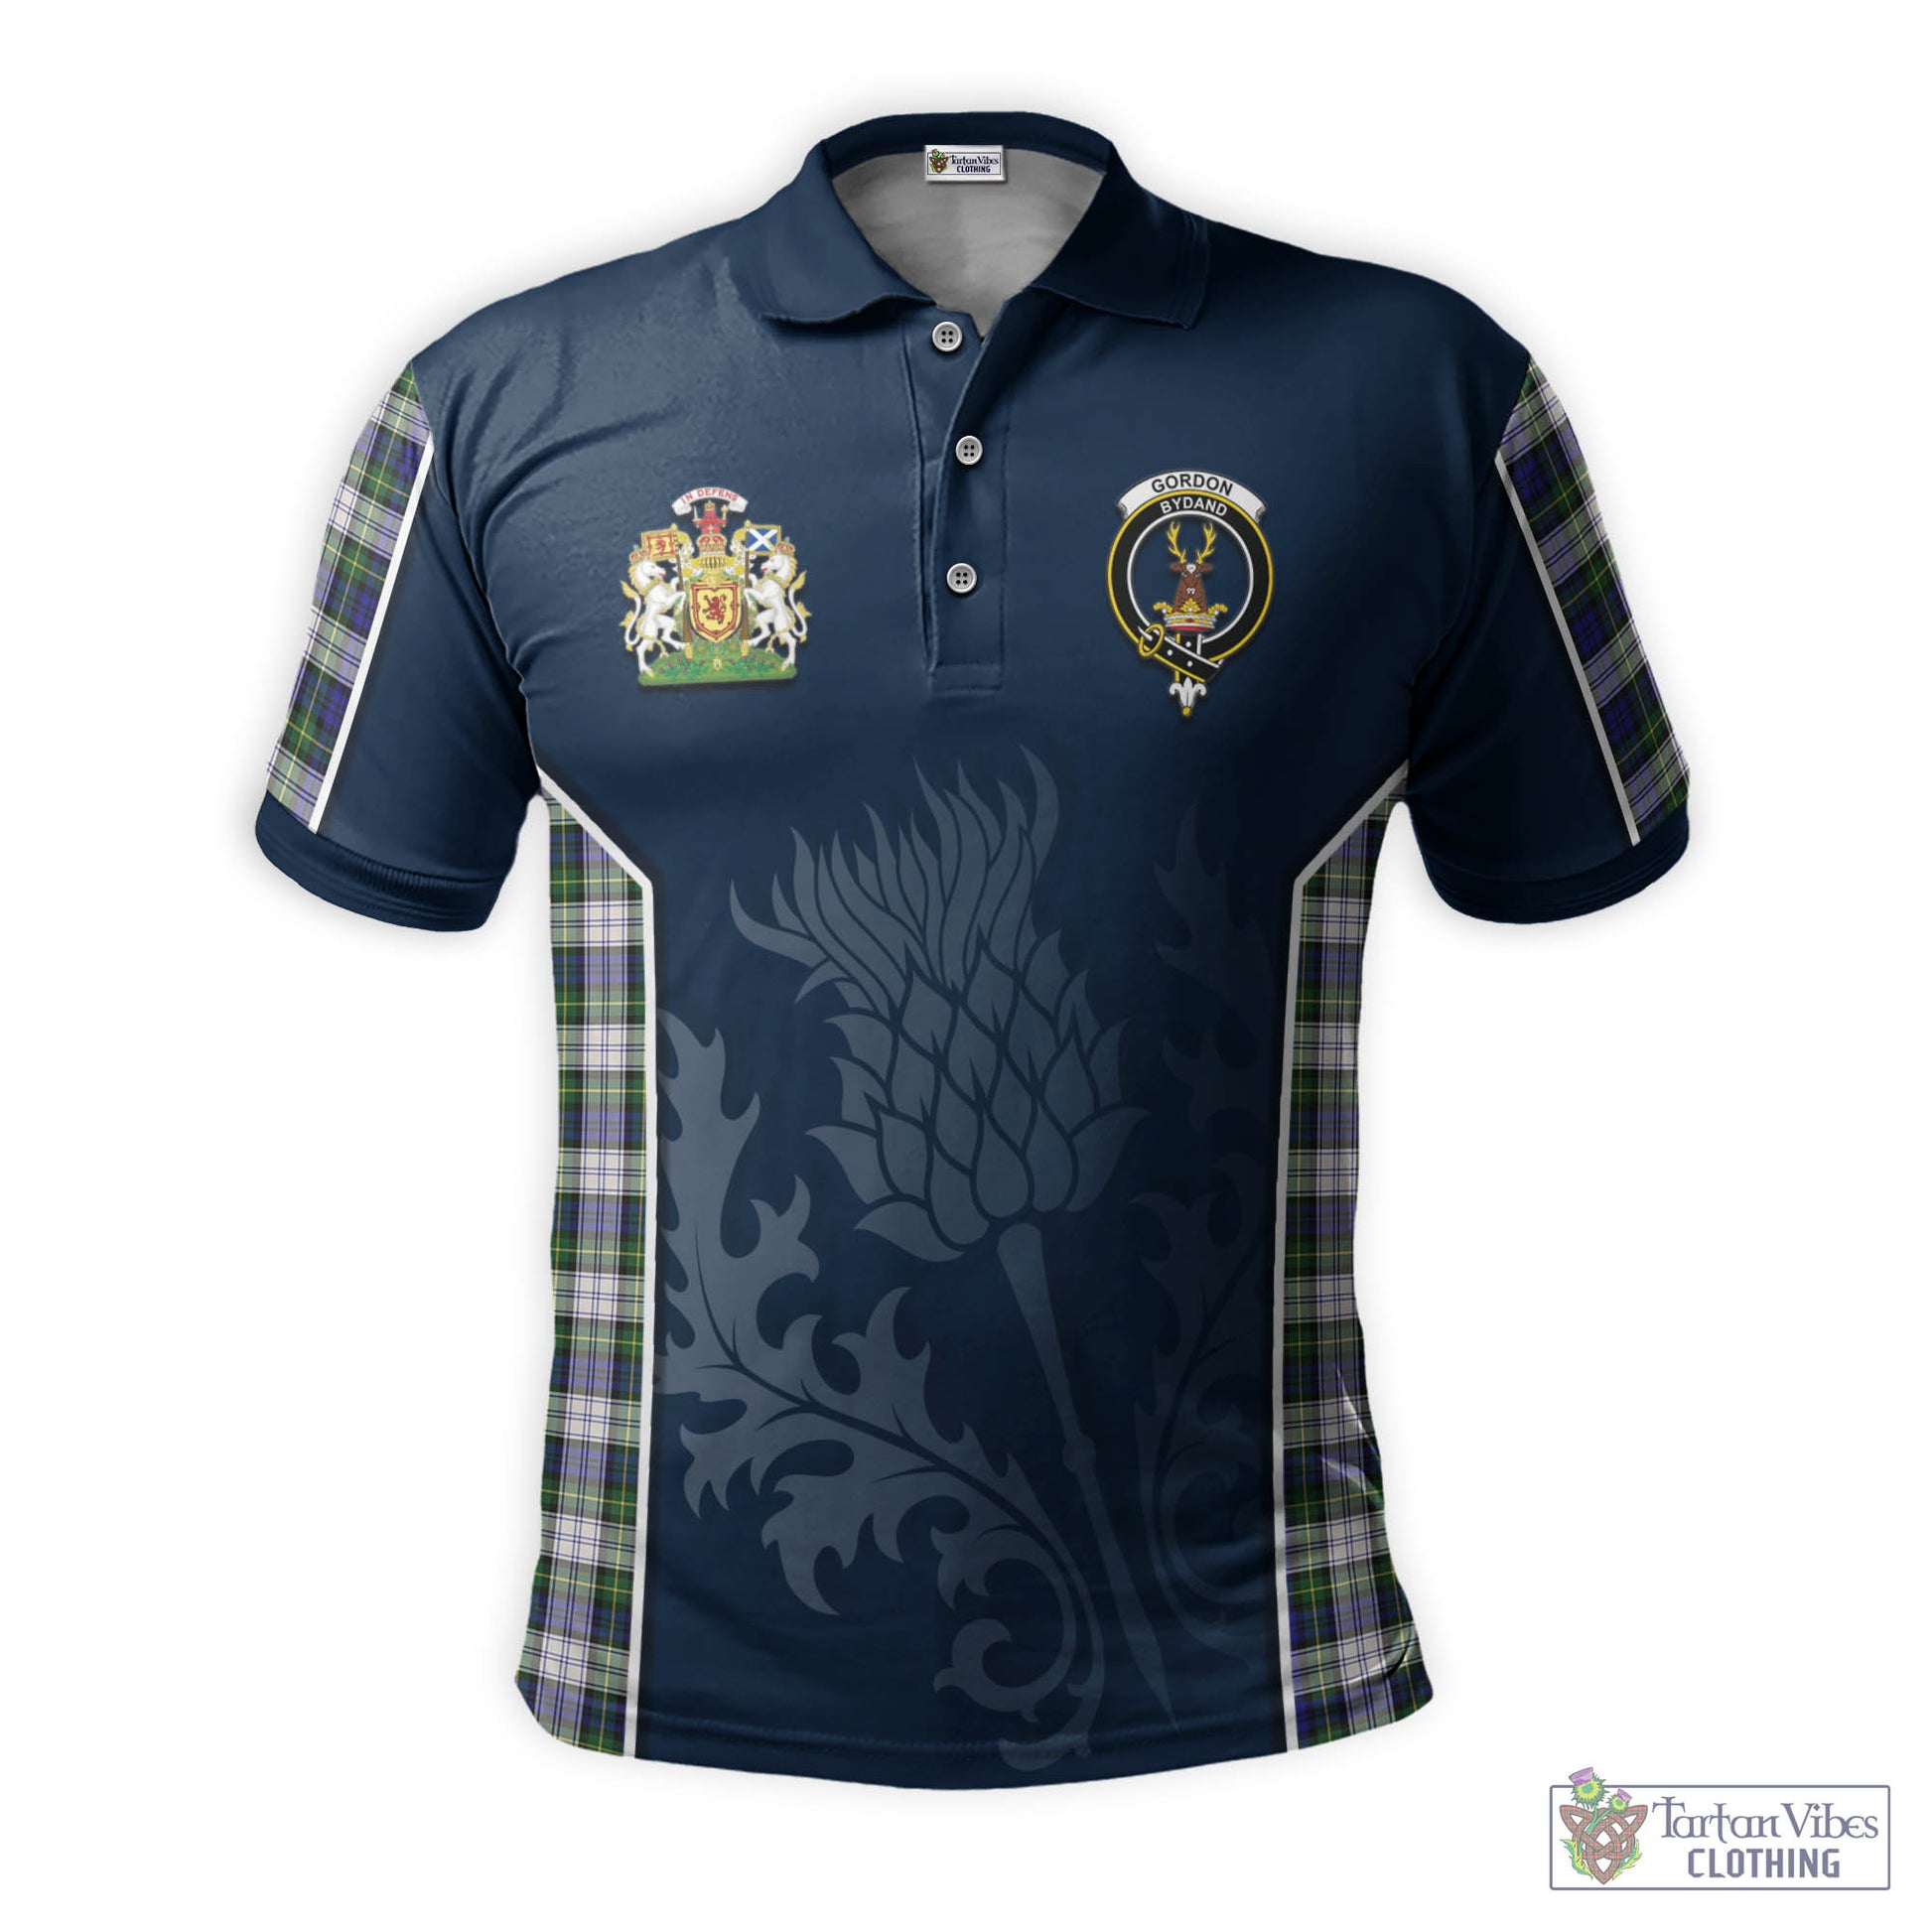 Tartan Vibes Clothing Gordon Dress Modern Tartan Men's Polo Shirt with Family Crest and Scottish Thistle Vibes Sport Style